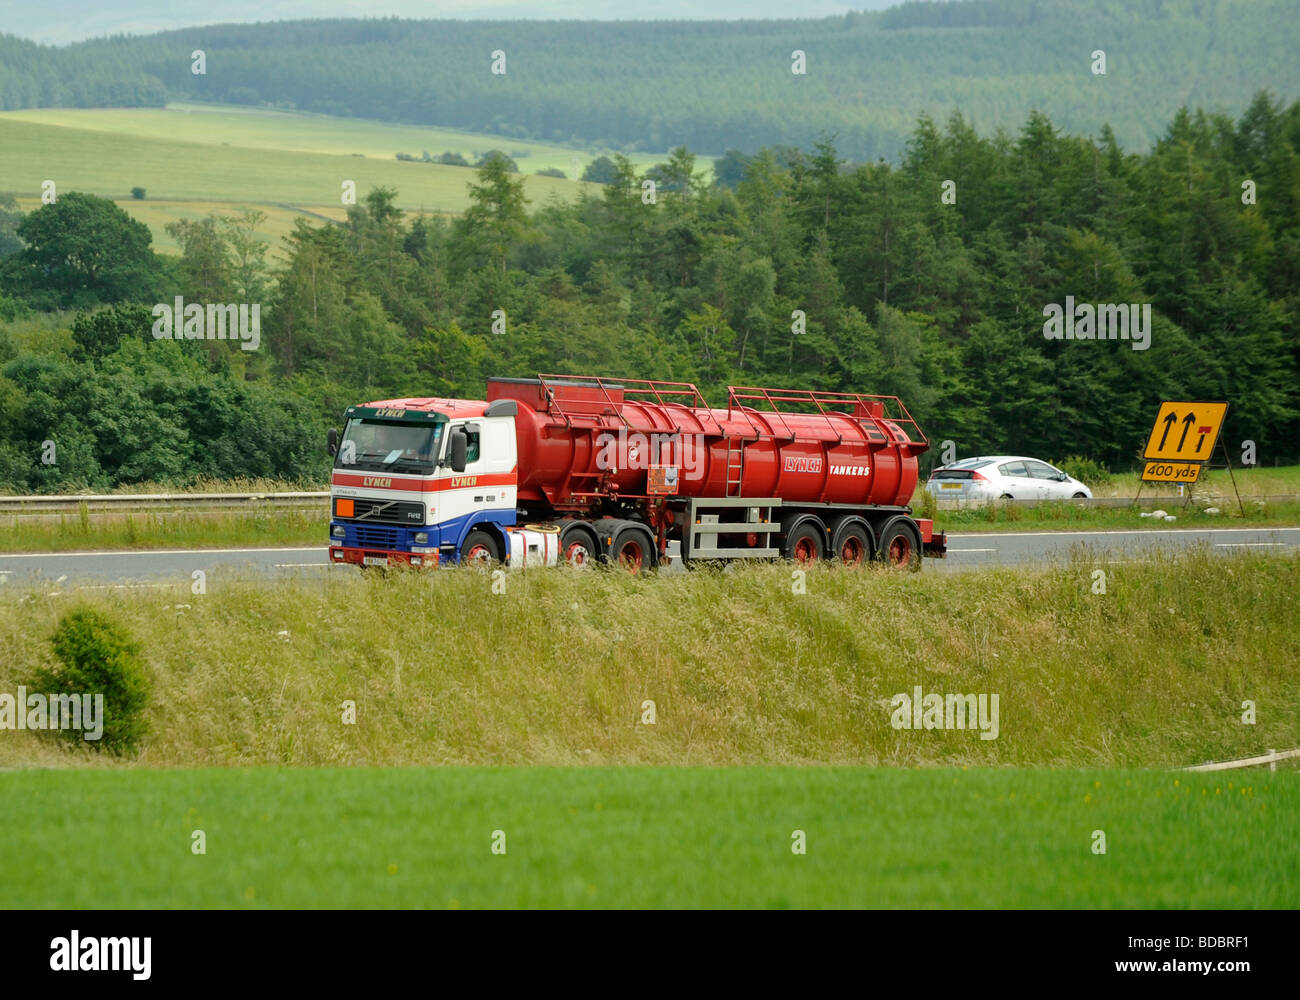 Volvo truck with tanker trailer James Lynch Northwich carrying hazardous dangerous ADR cargo Stock Photo